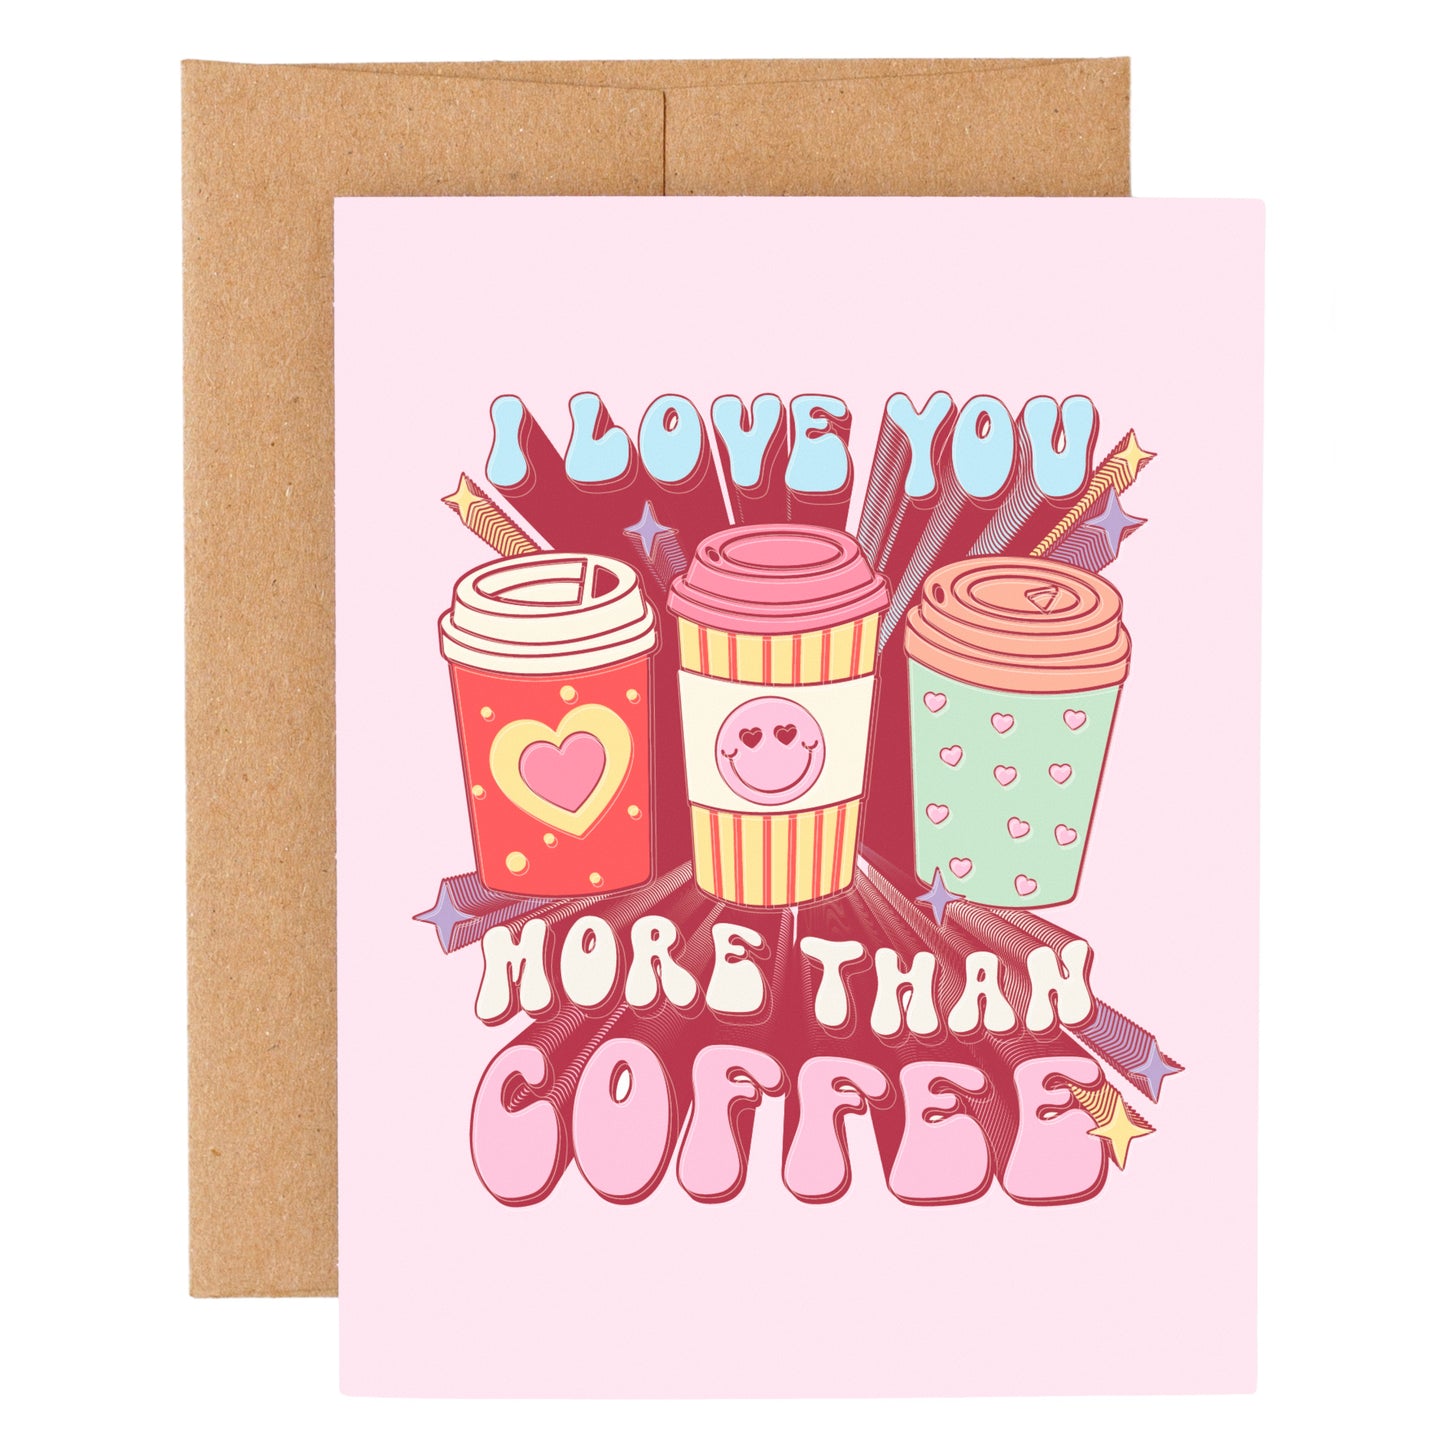 I Love You More Than Coffee - Greeting Card